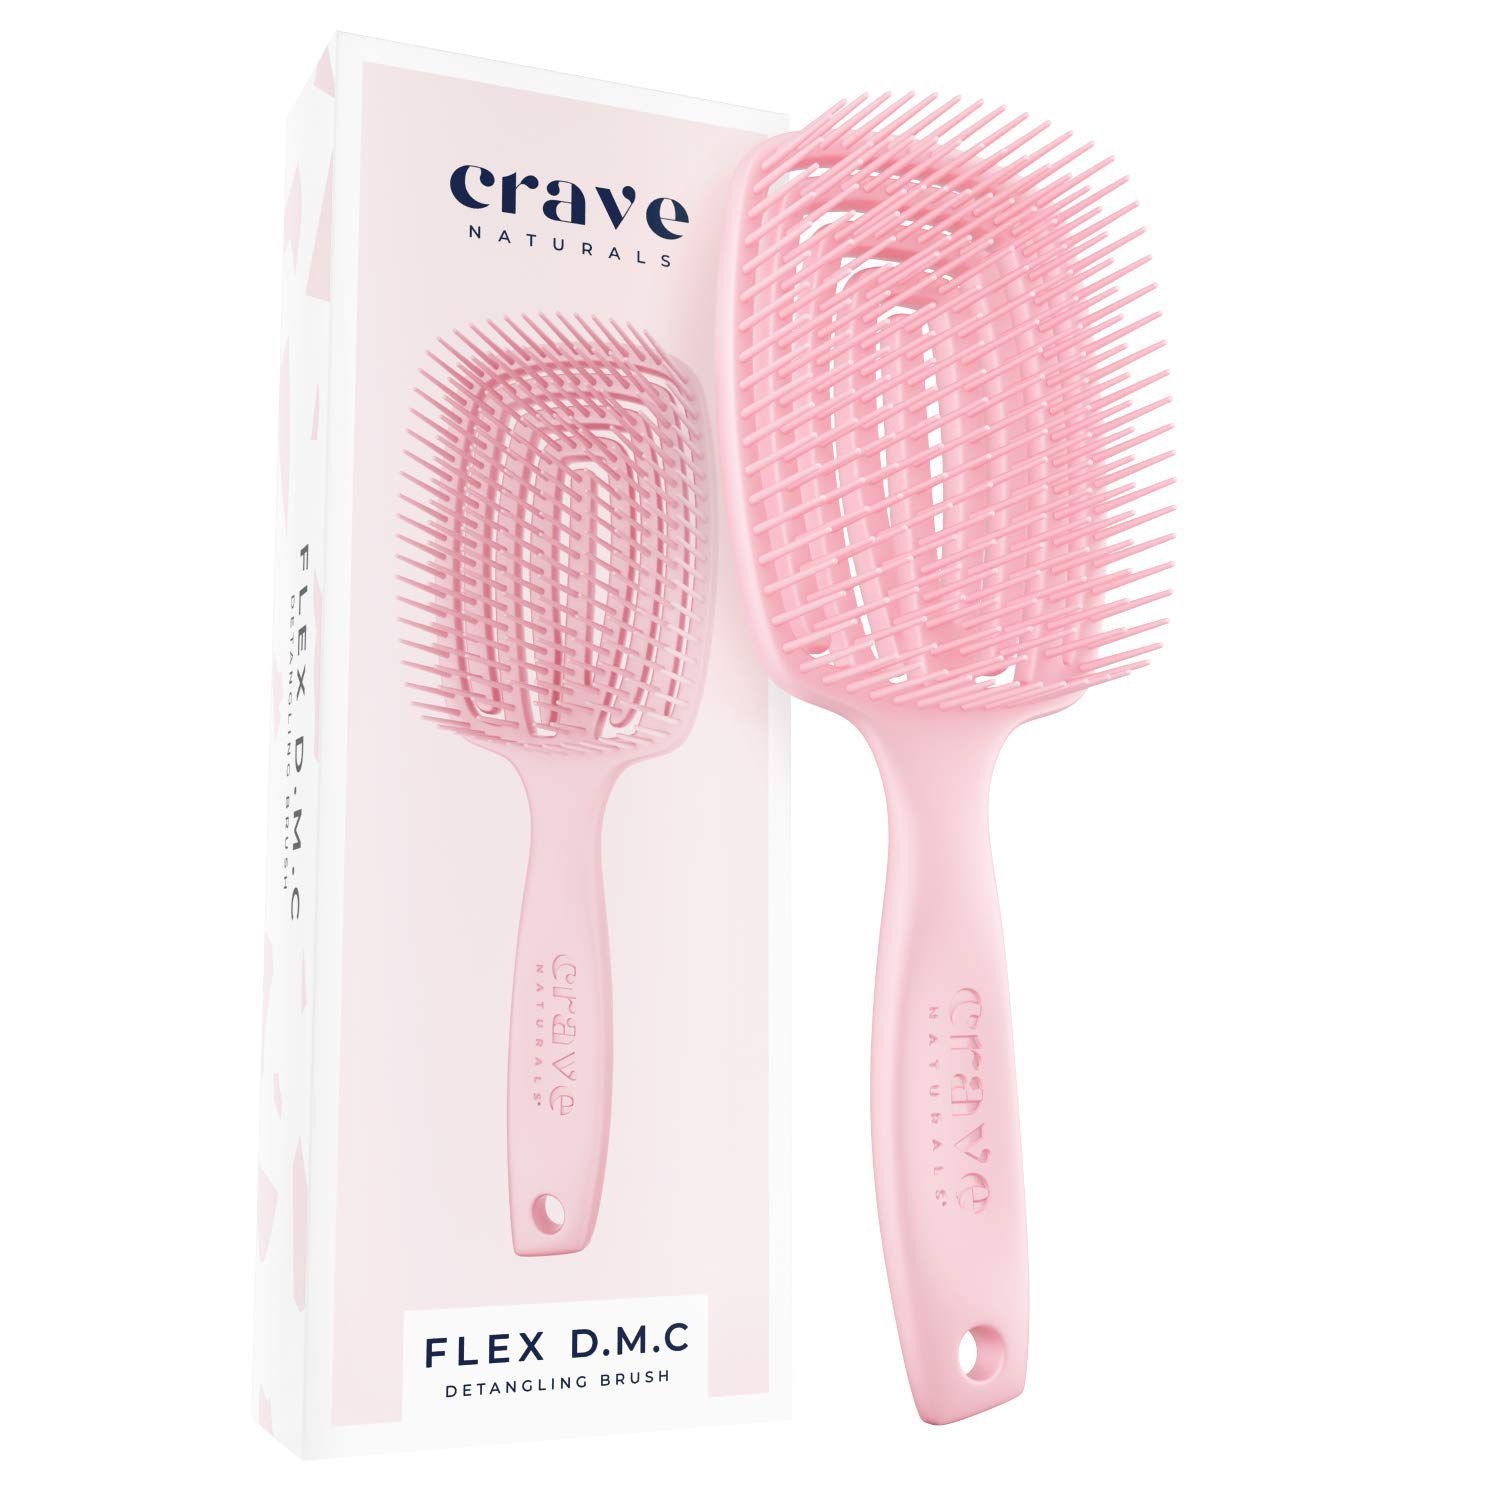 Crave Naturals FLEX DMC Четка за разплитане за естествена текстурирана коса